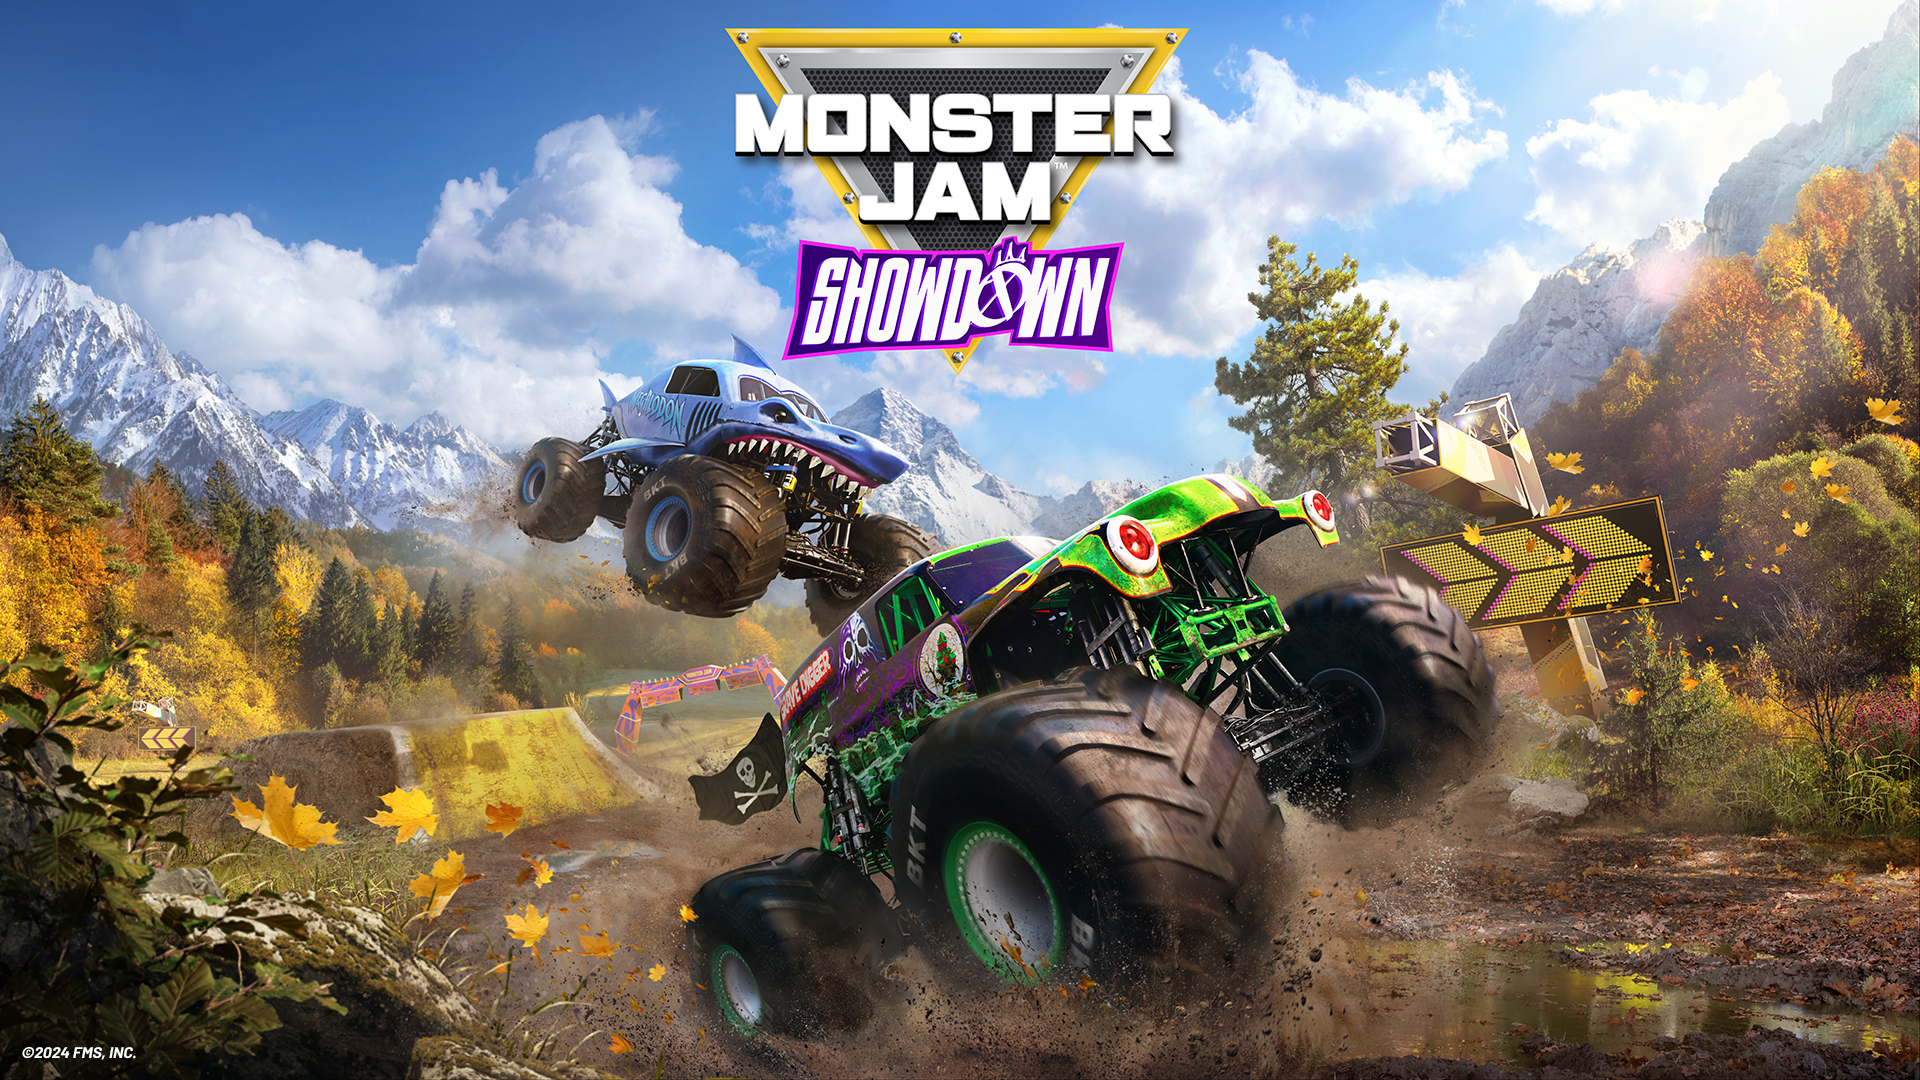 Monster Jam Showdown logo above image of Megalodon and Grave Digger racing through terrain in the Monster Jam Showdown video game